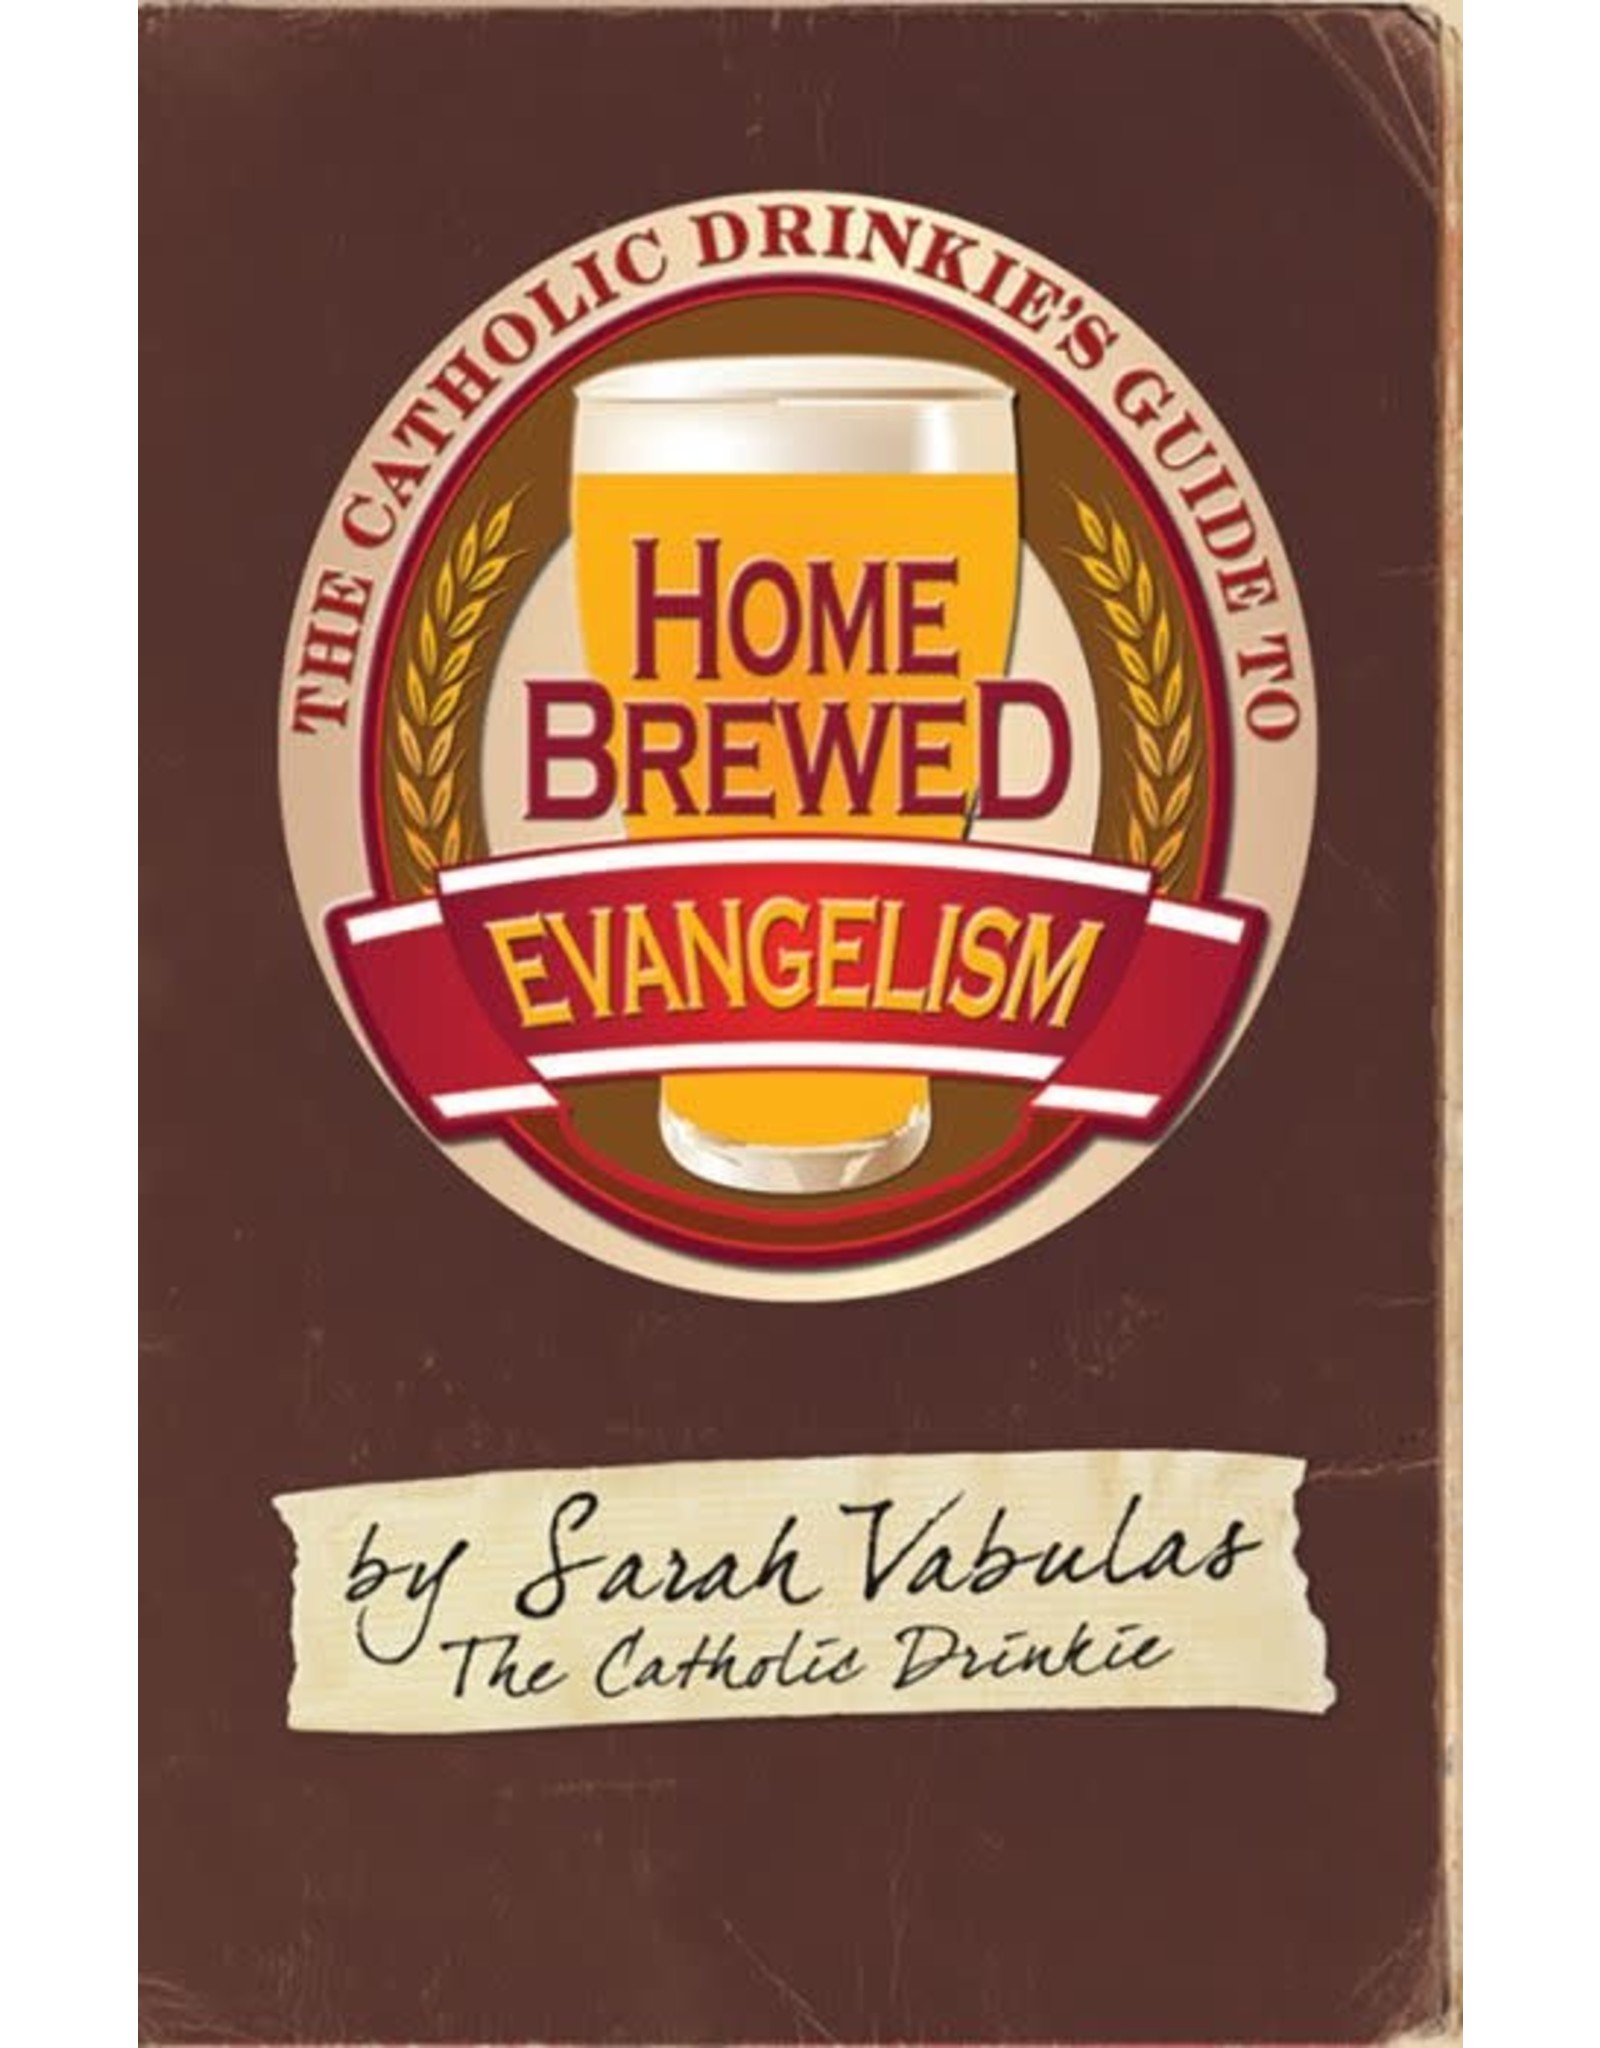 The Catholic Drinkie's Guide to Homebrewed Evangelism